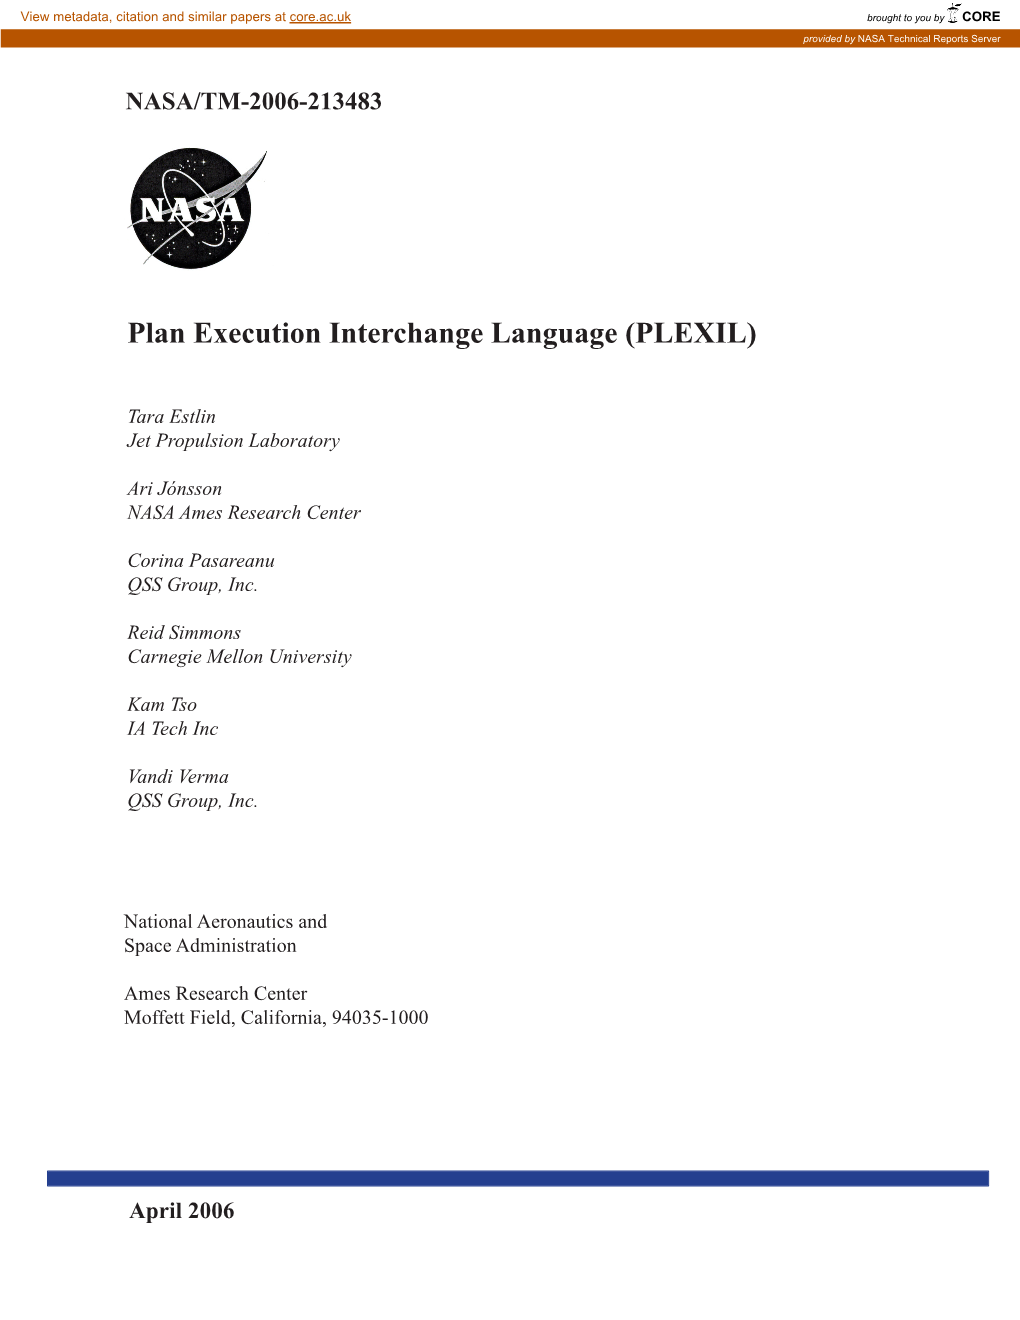 Plan Execution Interchange Language (PLEXIL)